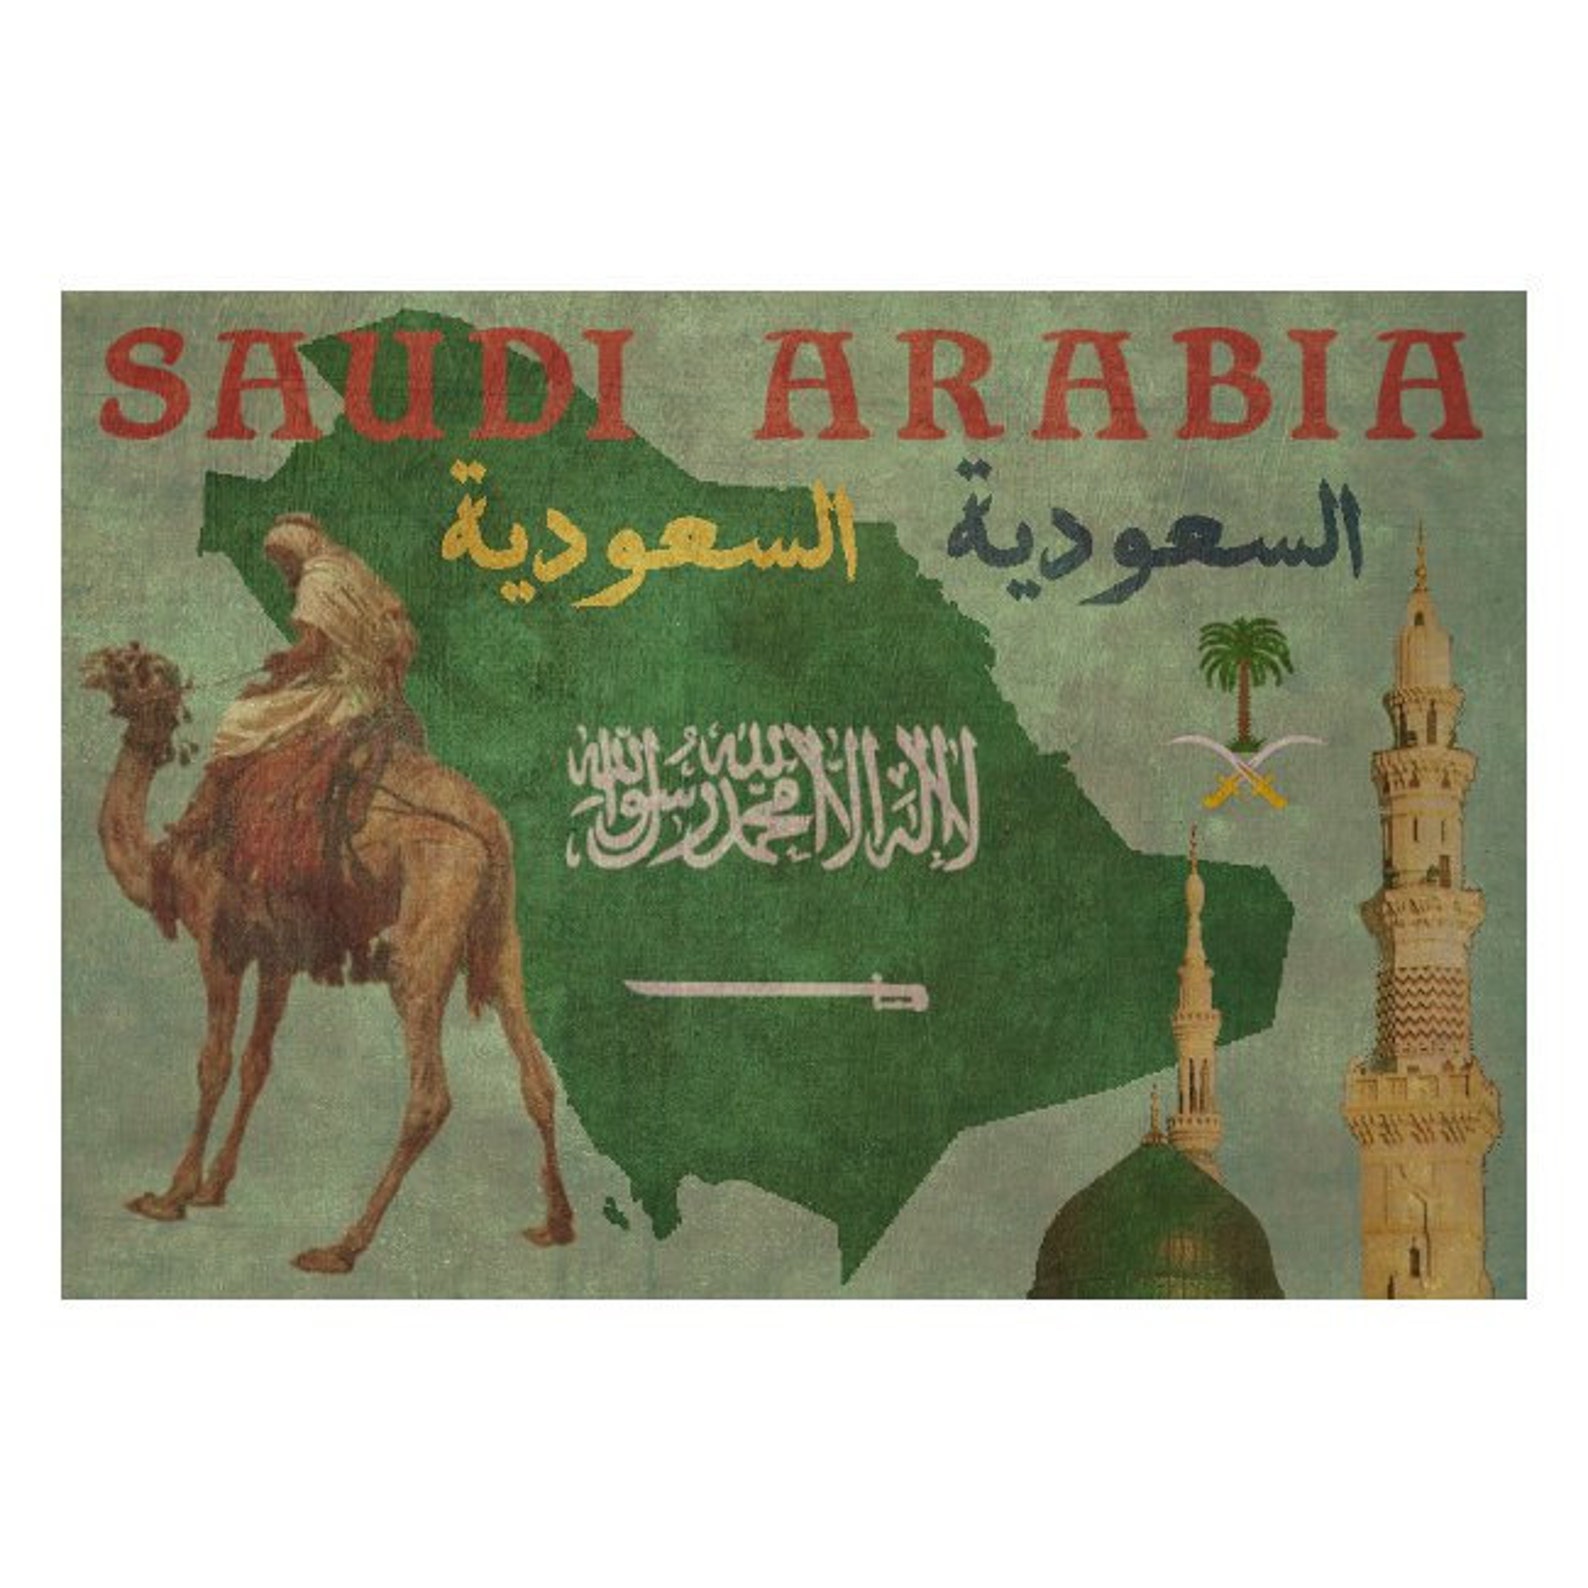 Arabia 1. Книга Арабия. Saudi Arabia Travel poster pictures.